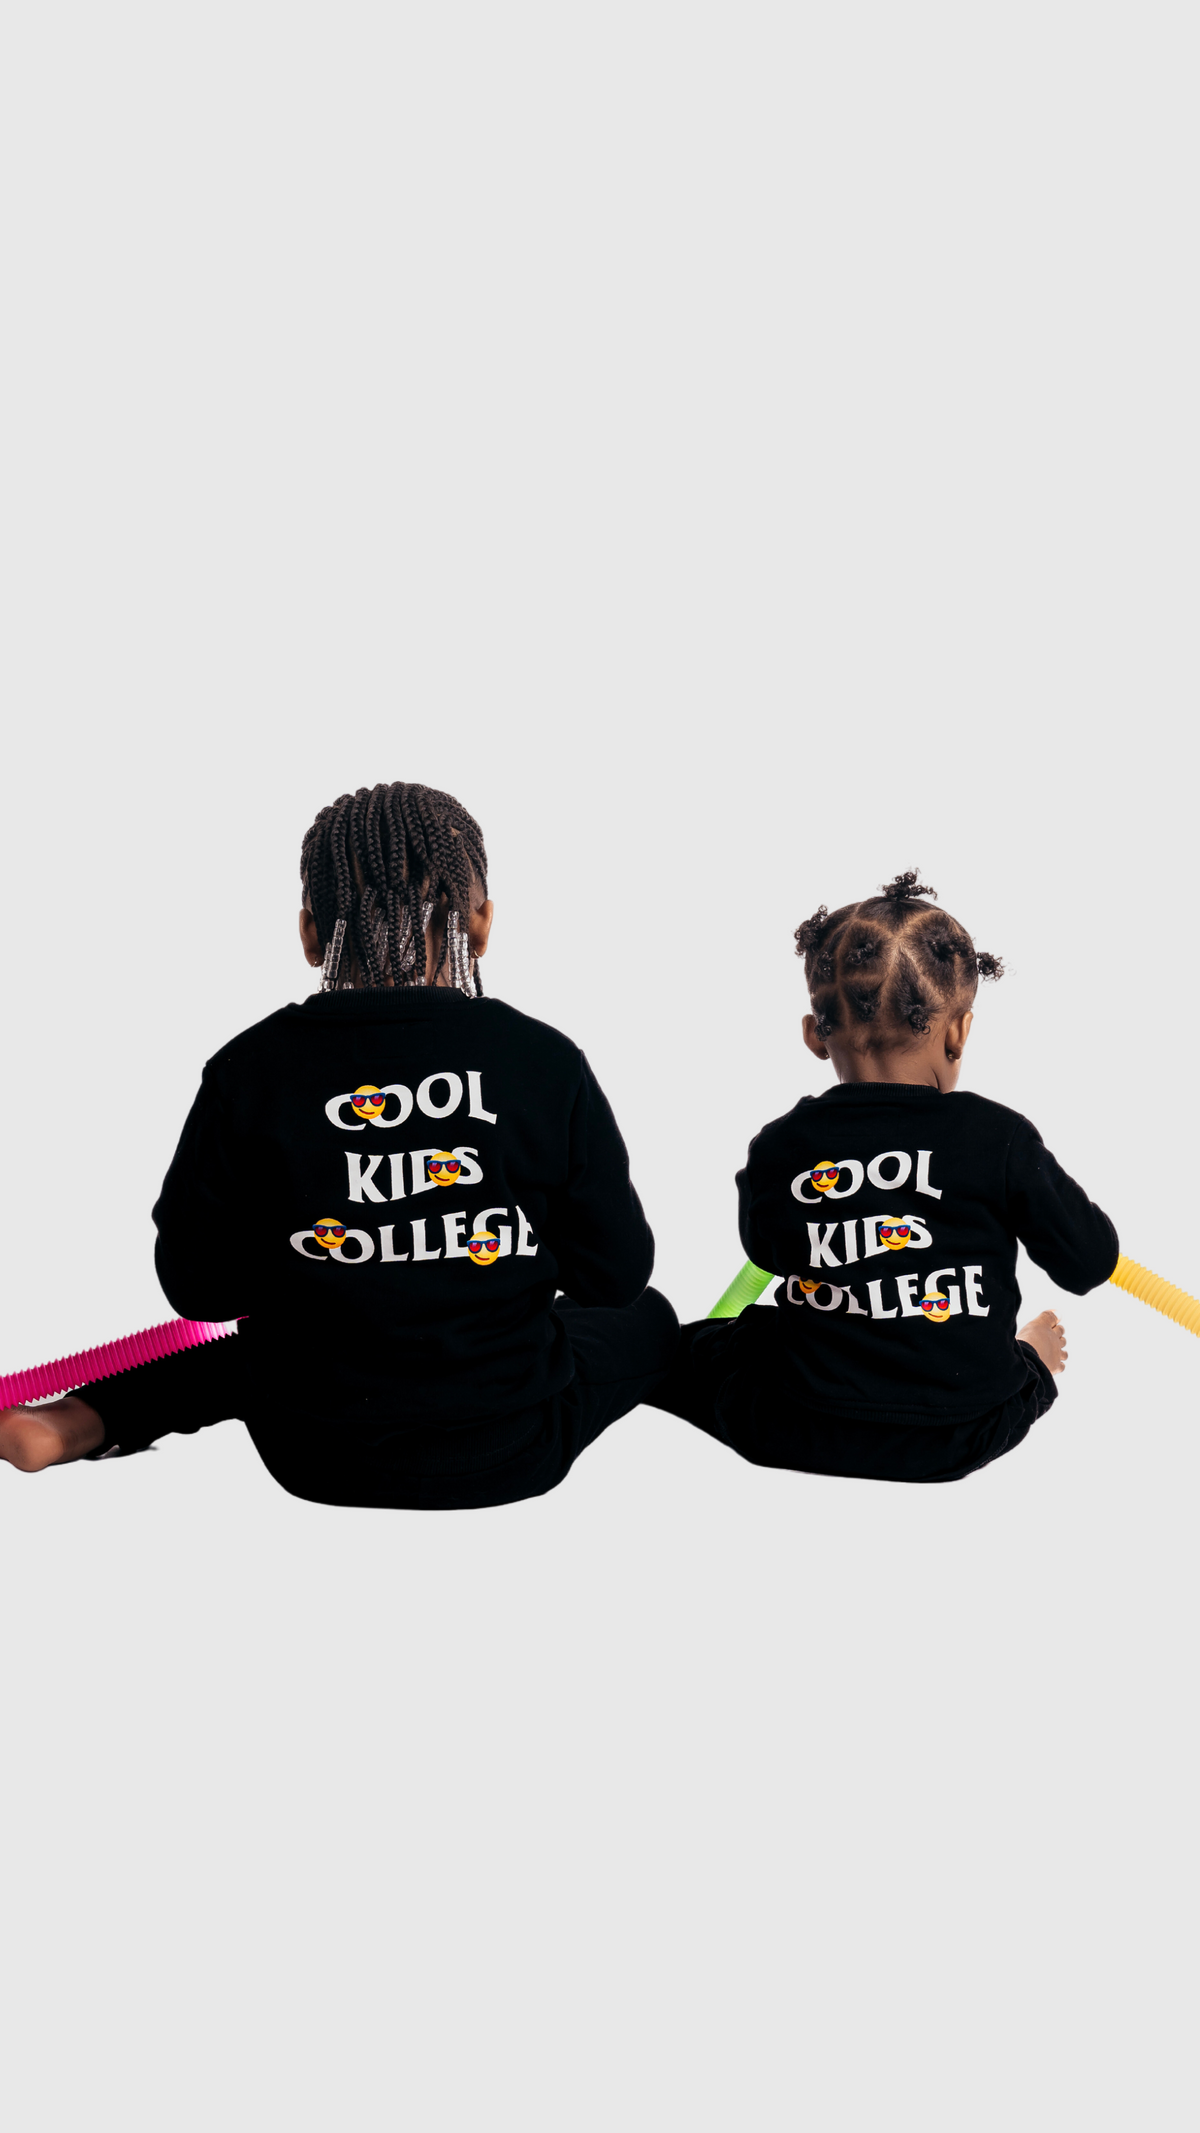 Cool Kids College Sweatsuit - Black